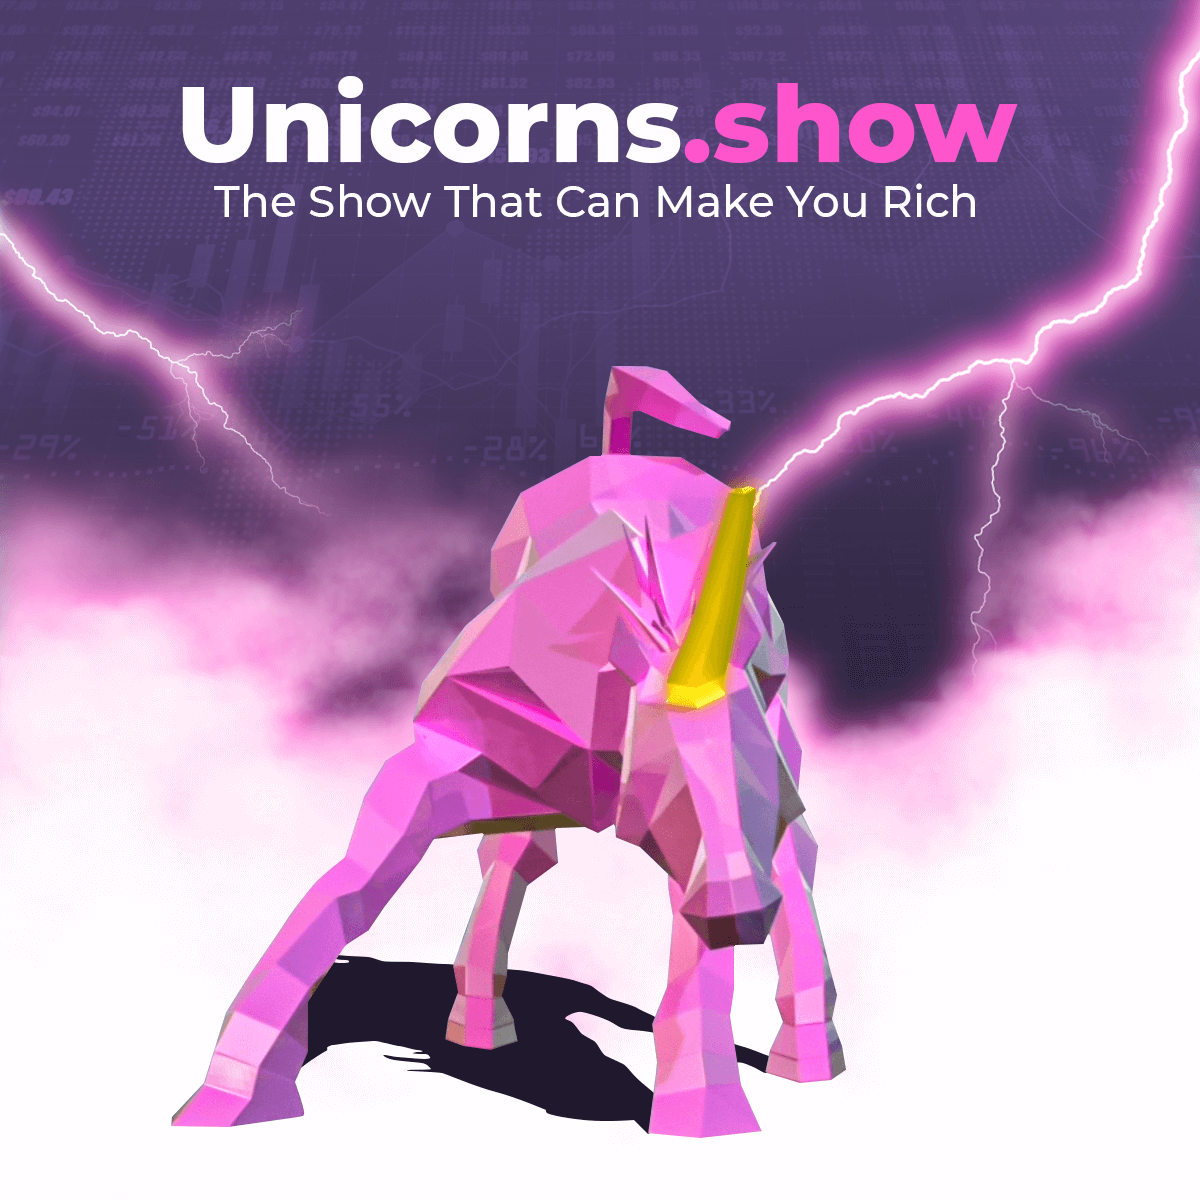 Unicorns.Show